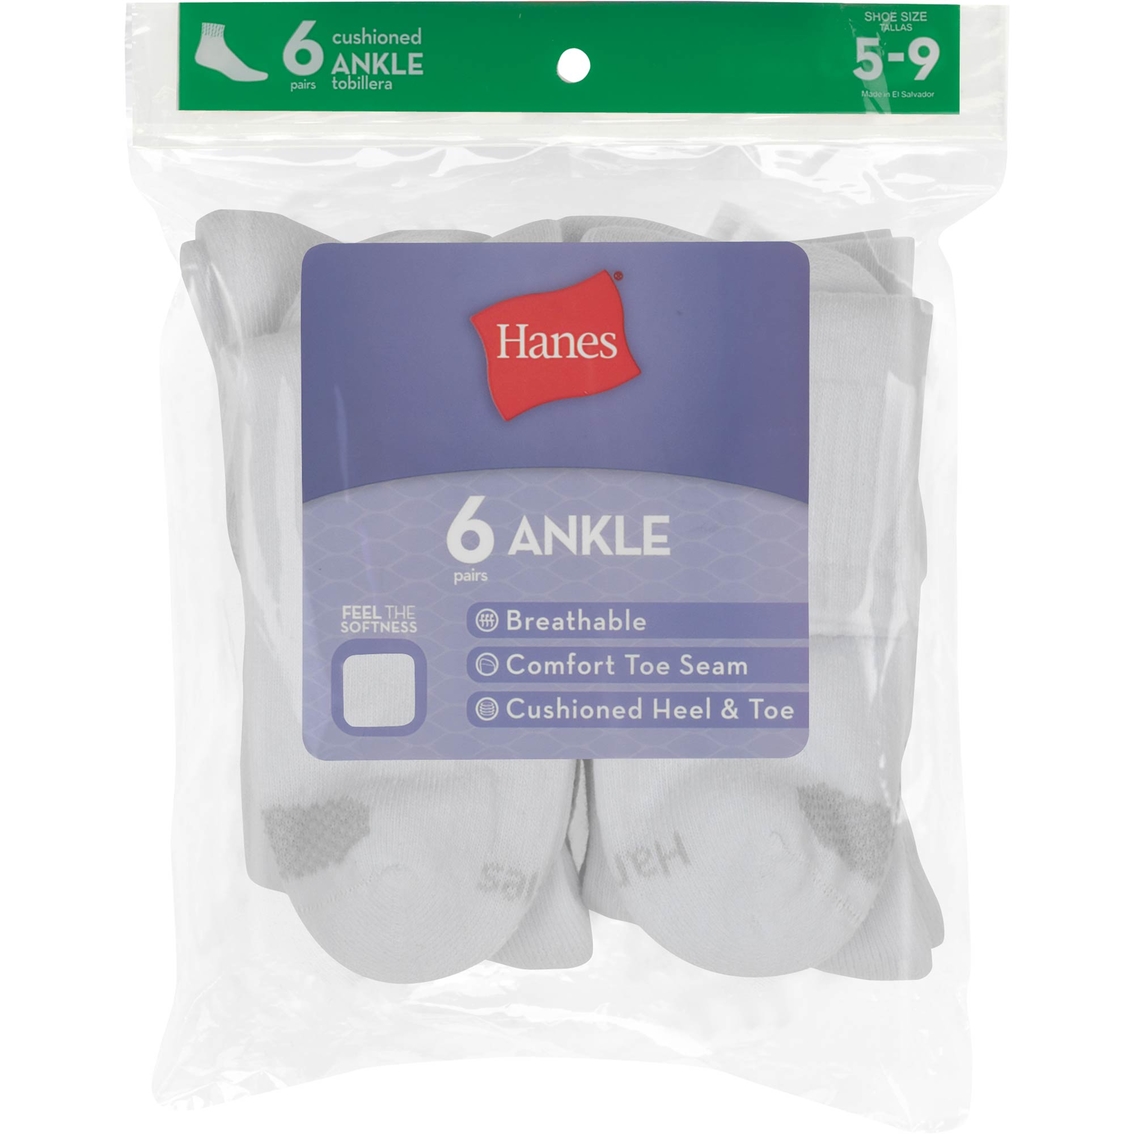 Hanes Red Label Women's Ankle Socks, 6 Pk. | Socks & Tights | Clothing ...